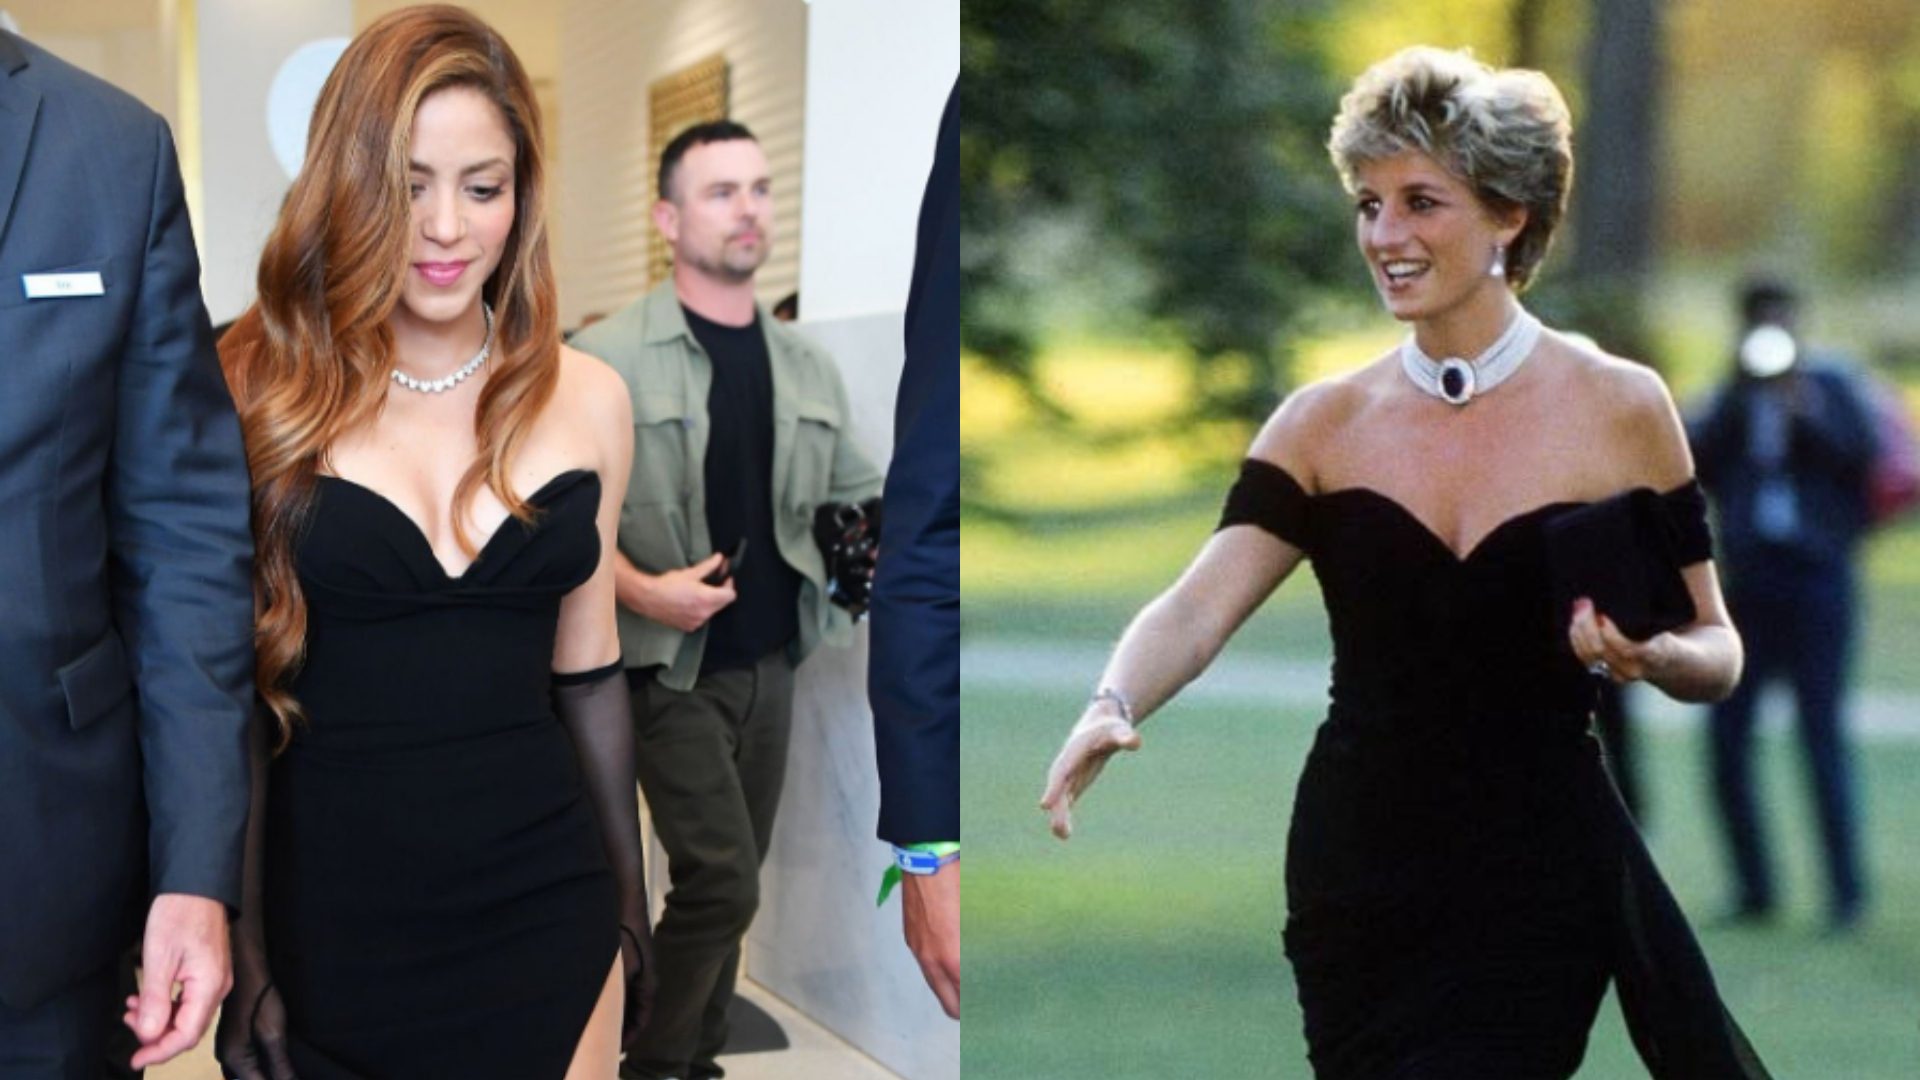 Celebrities wore similar dresses (Images: Twitter @theemmegirl)